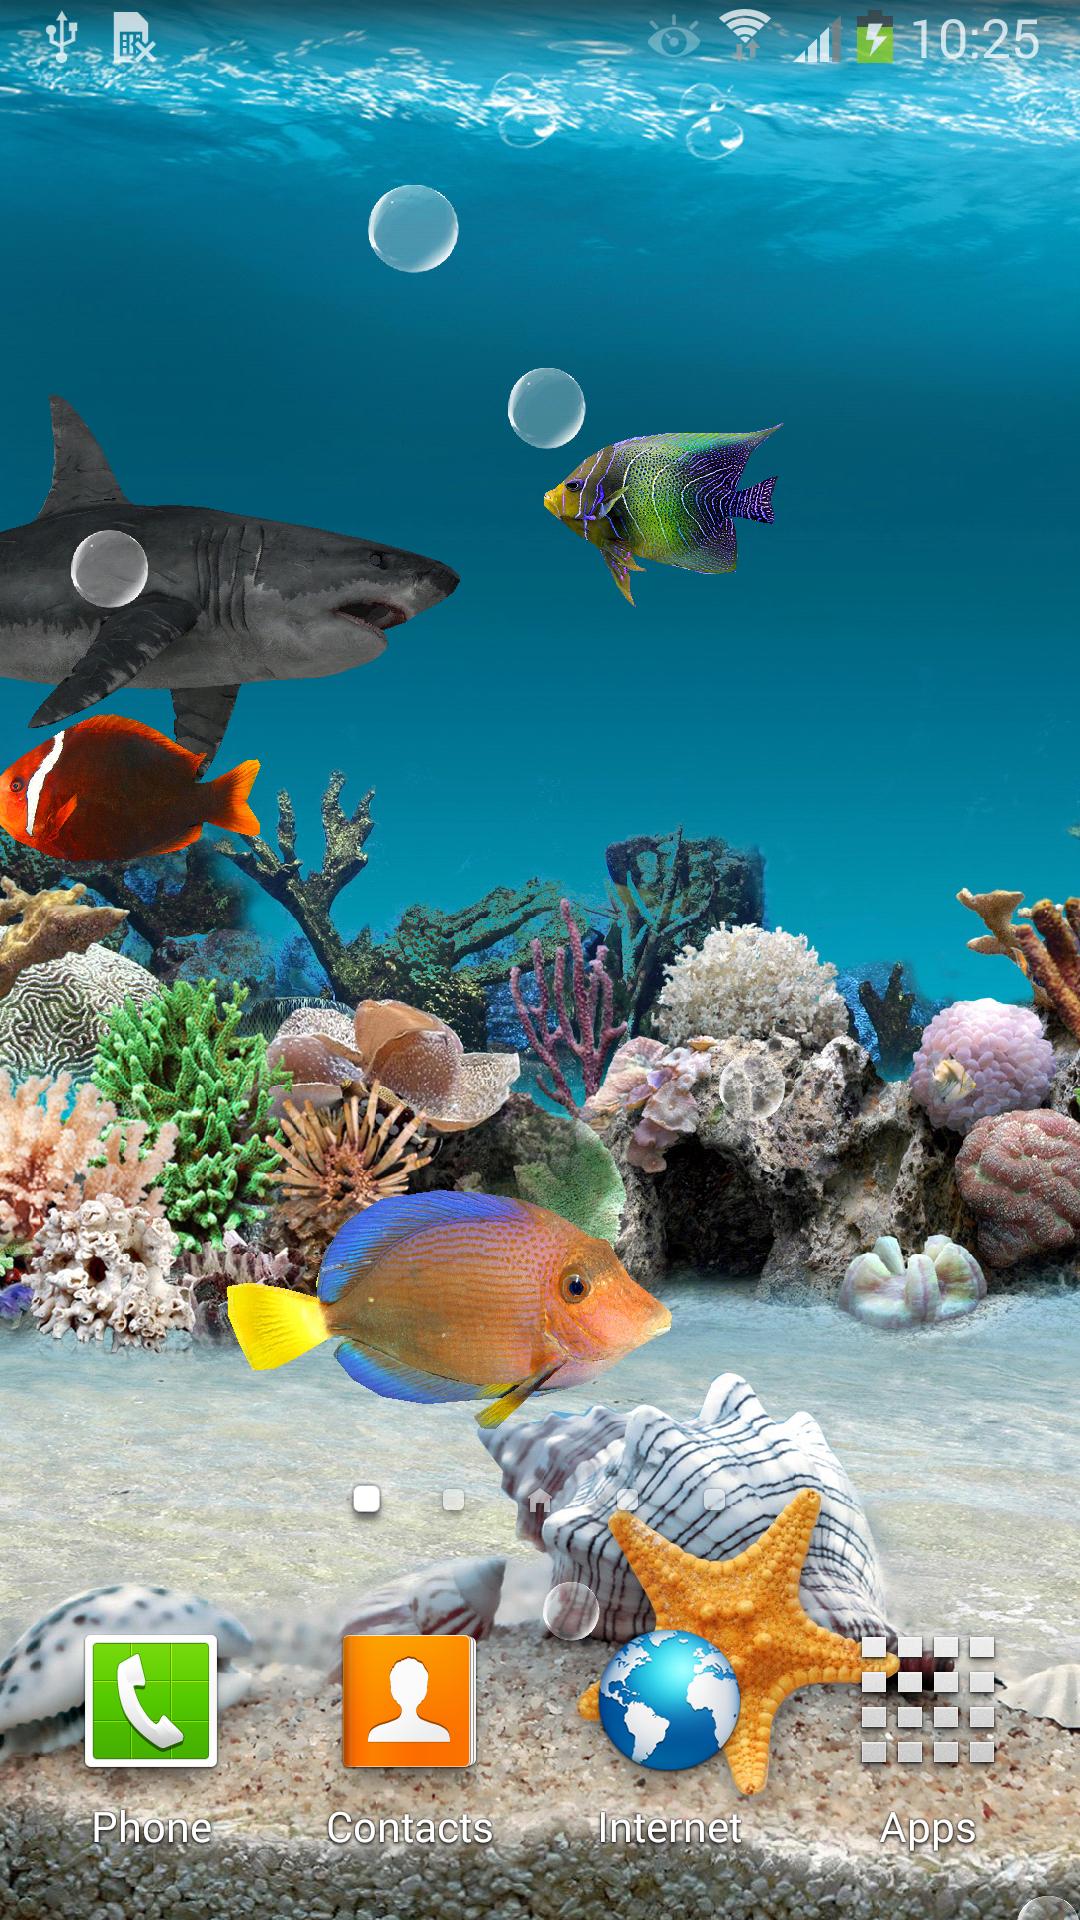 3d 물고기 라이브 배경 화면,물고기,해양 생물학,물고기,산호초 물고기,수중